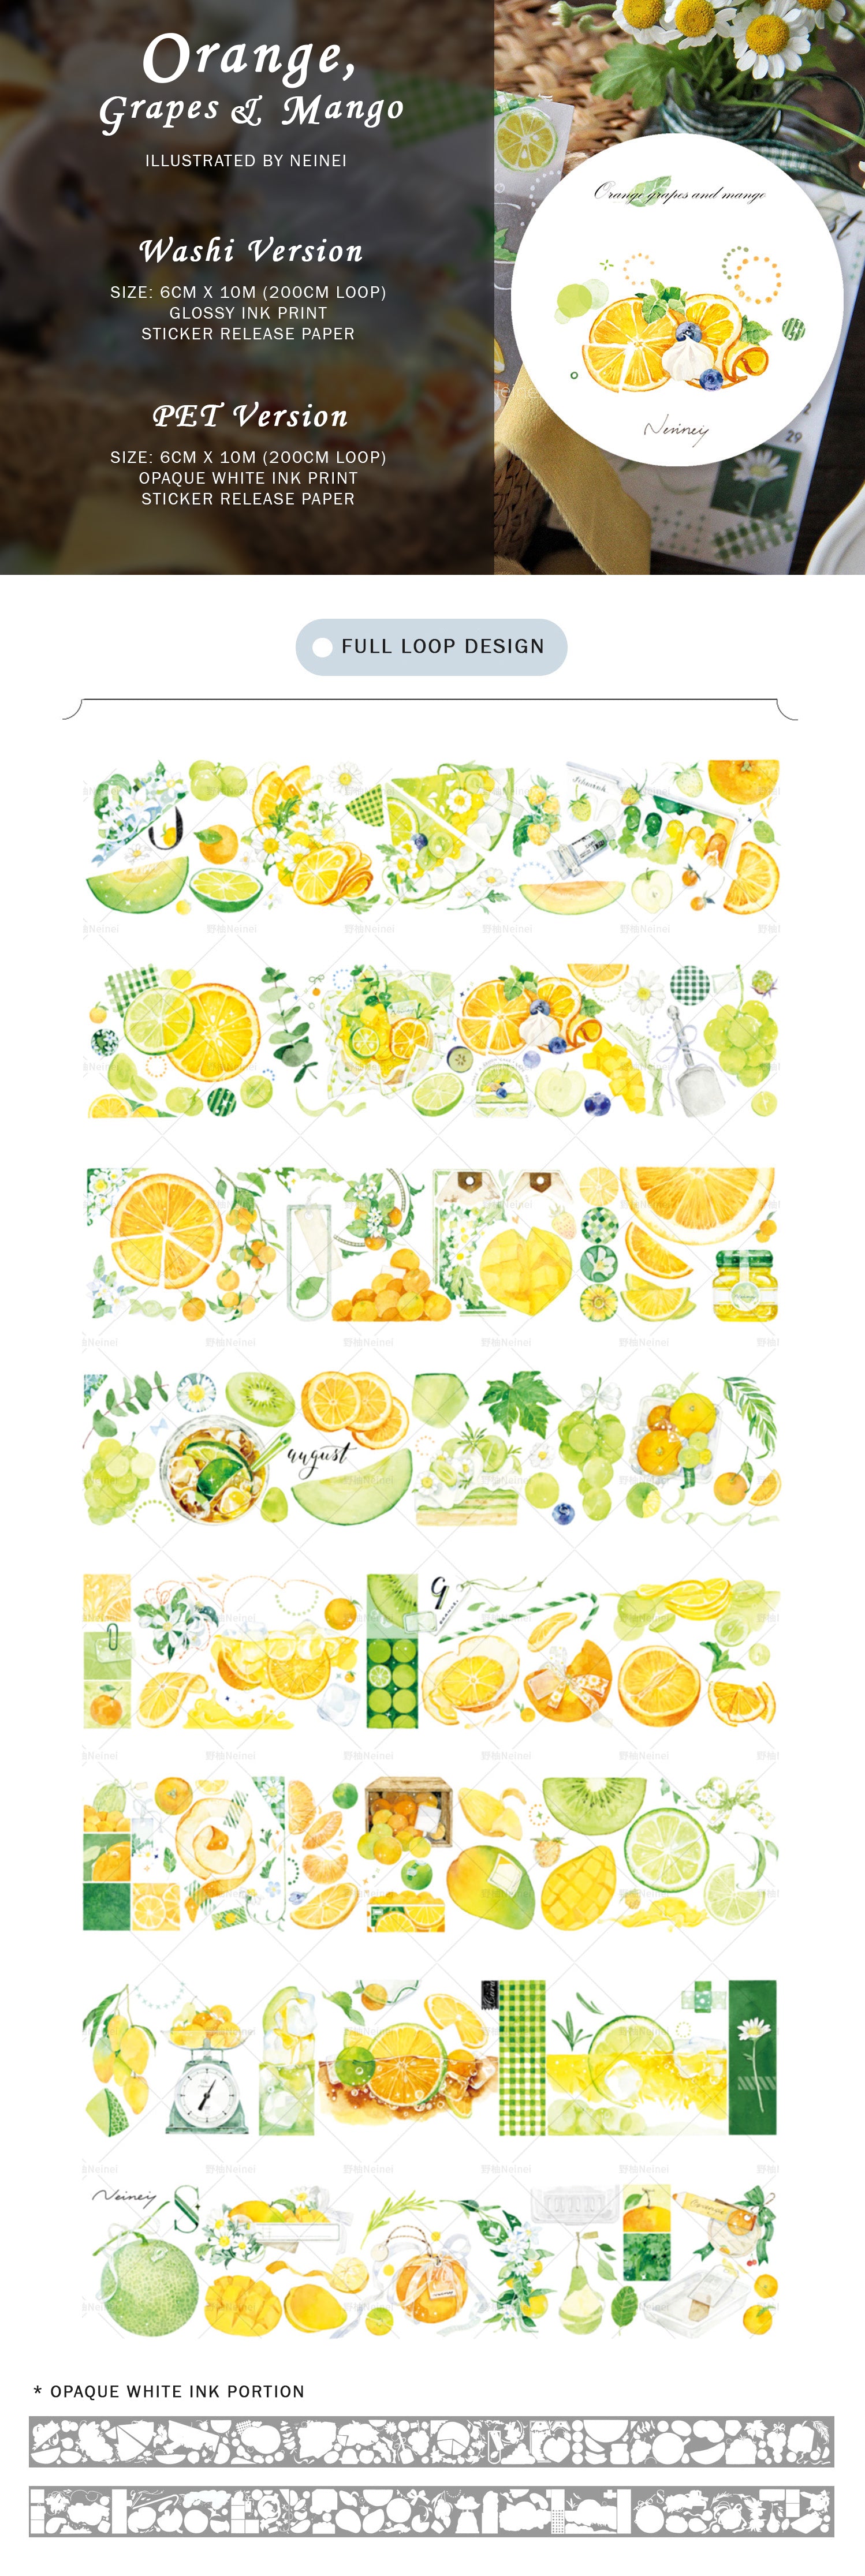 Neinei Illustration Tape Sample: Orange, Grapes, and Mango